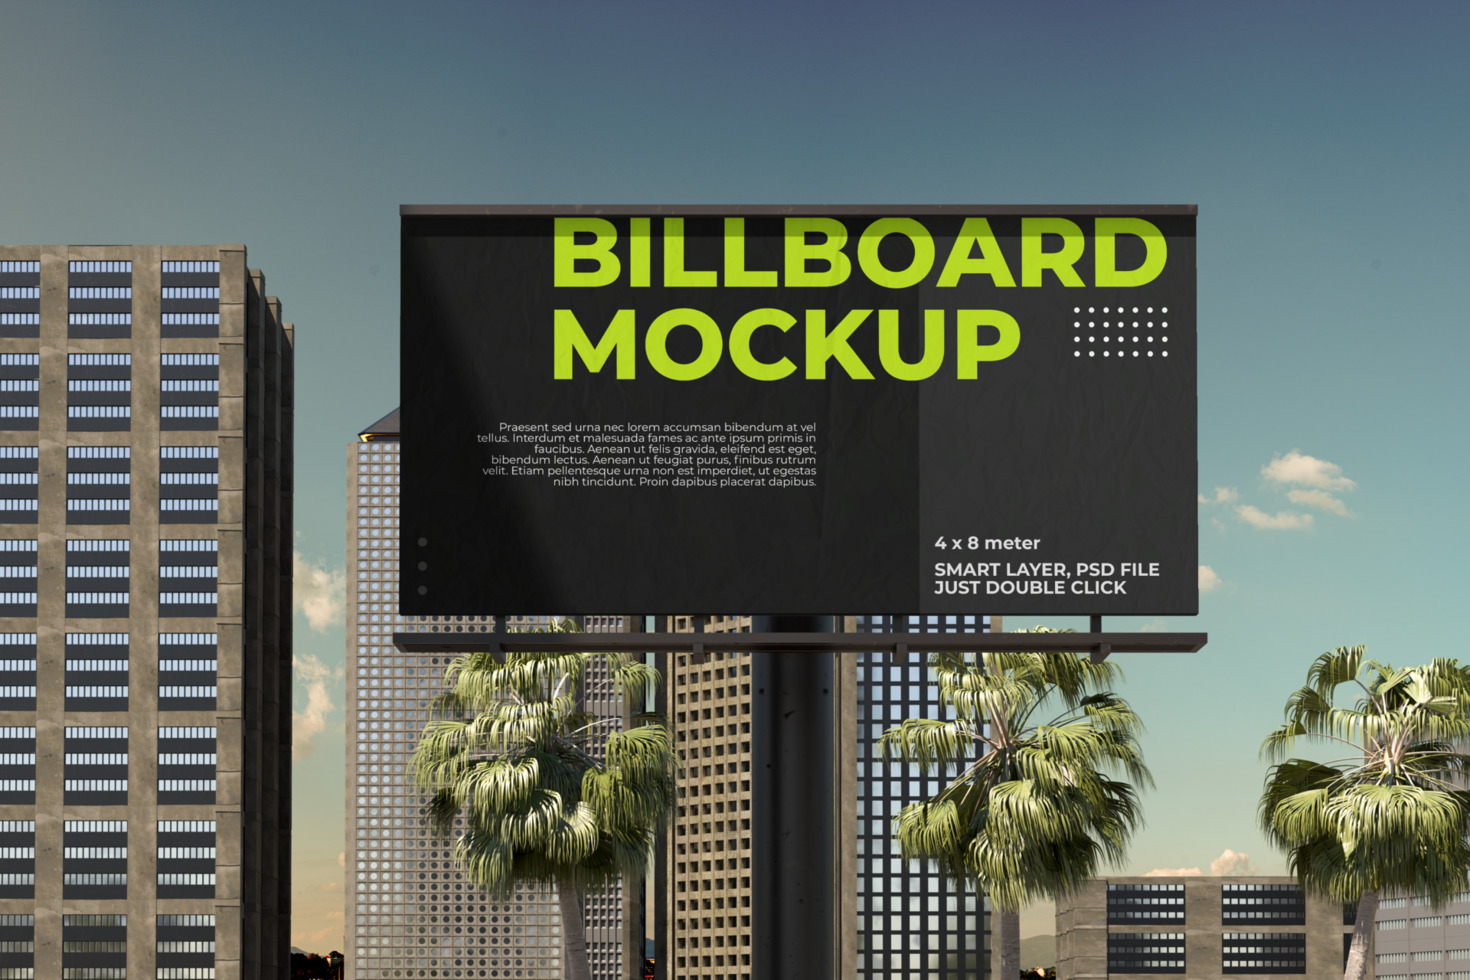 Roadside Billboard Mockup psd